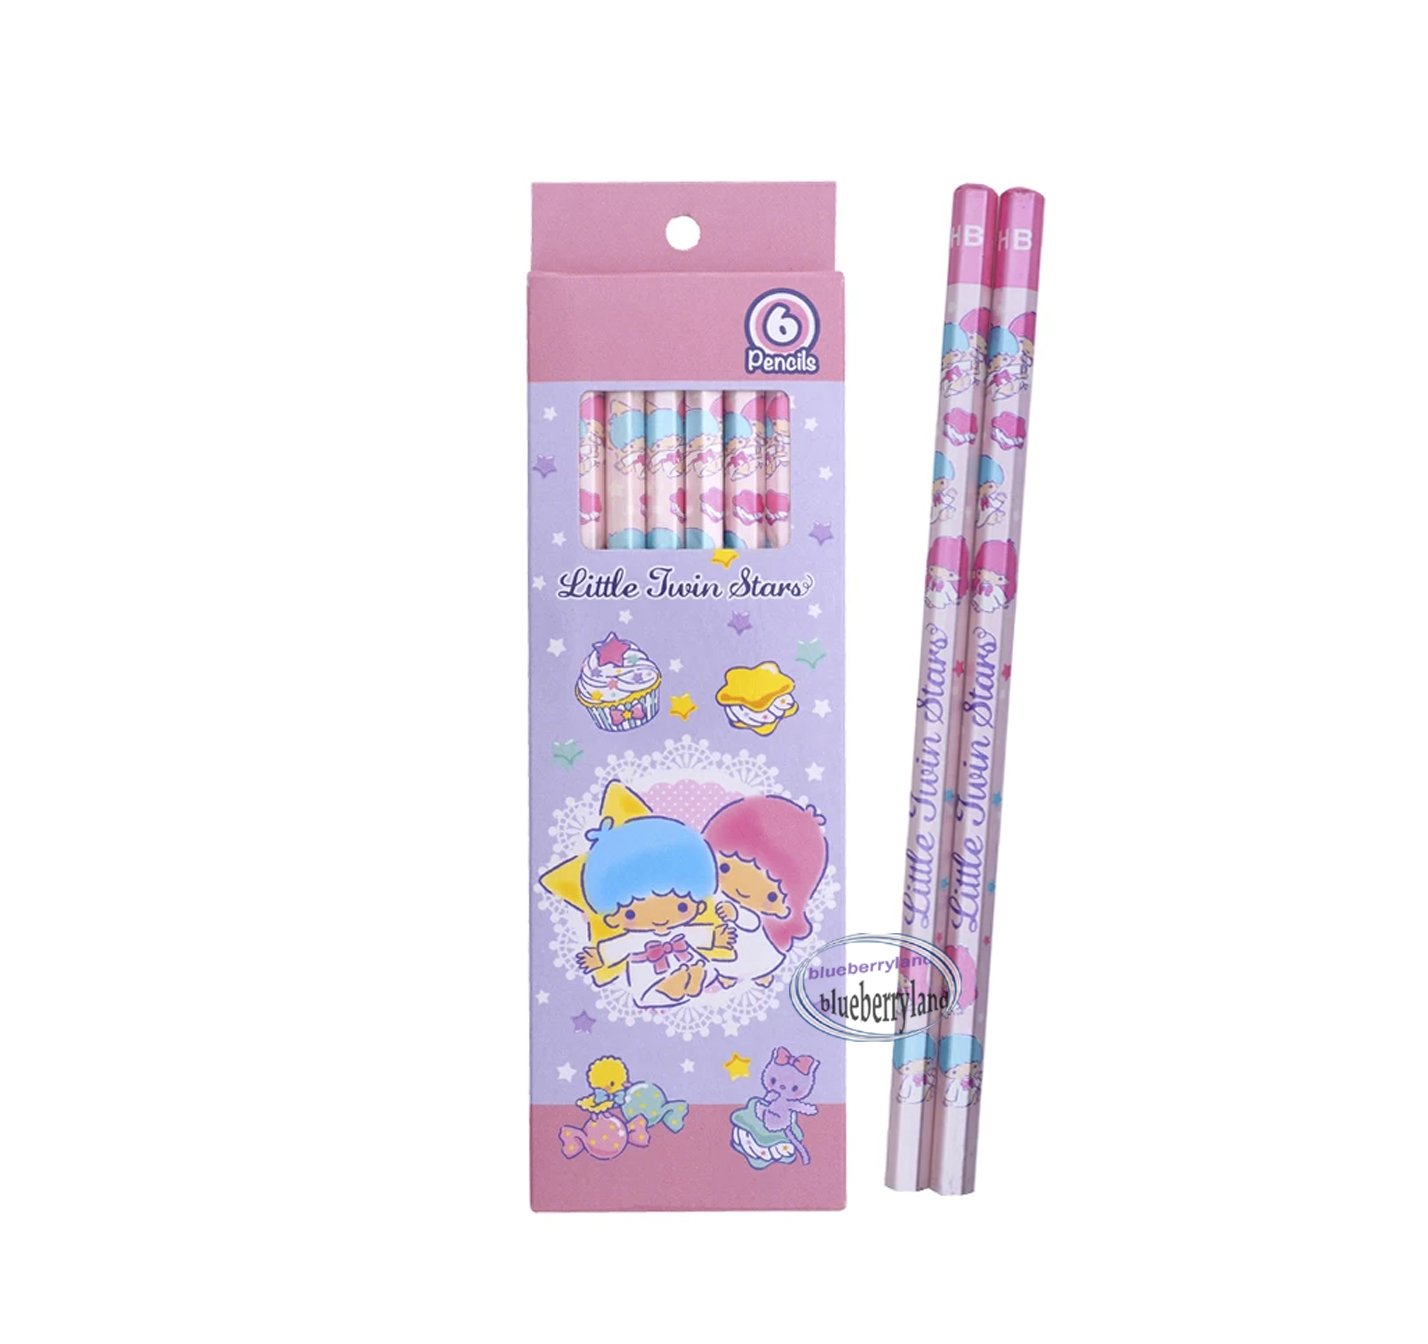 Sanrio Little Twin Stars 6 pieces HB pencils set with Hexagon shape Pencil gift box School